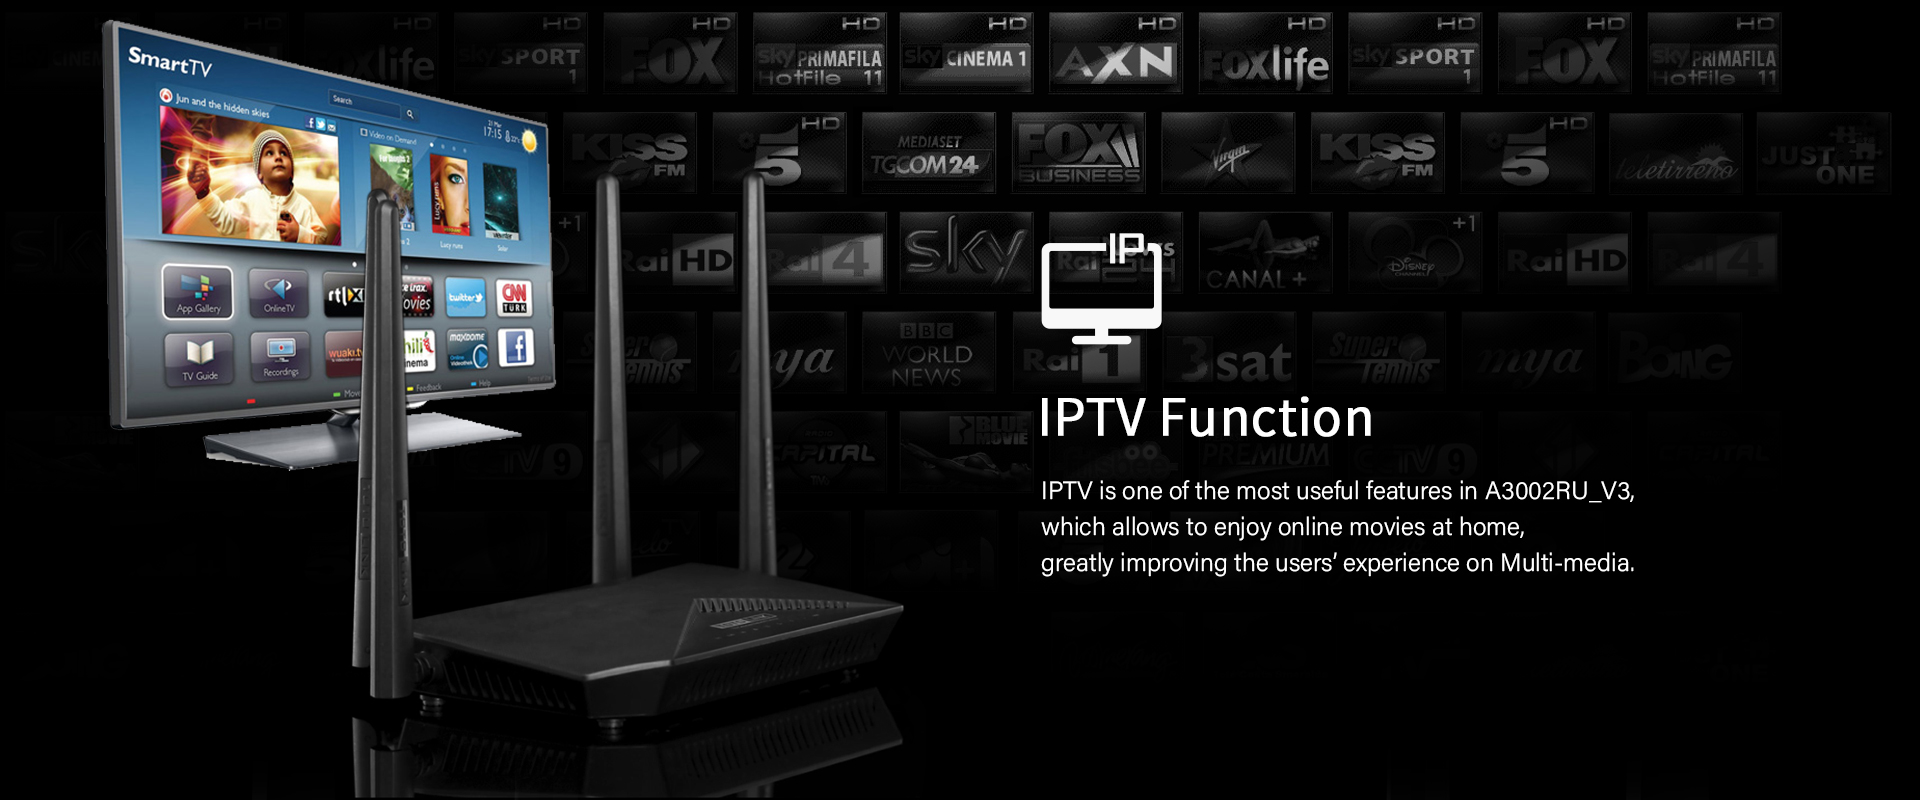 IPTV function support